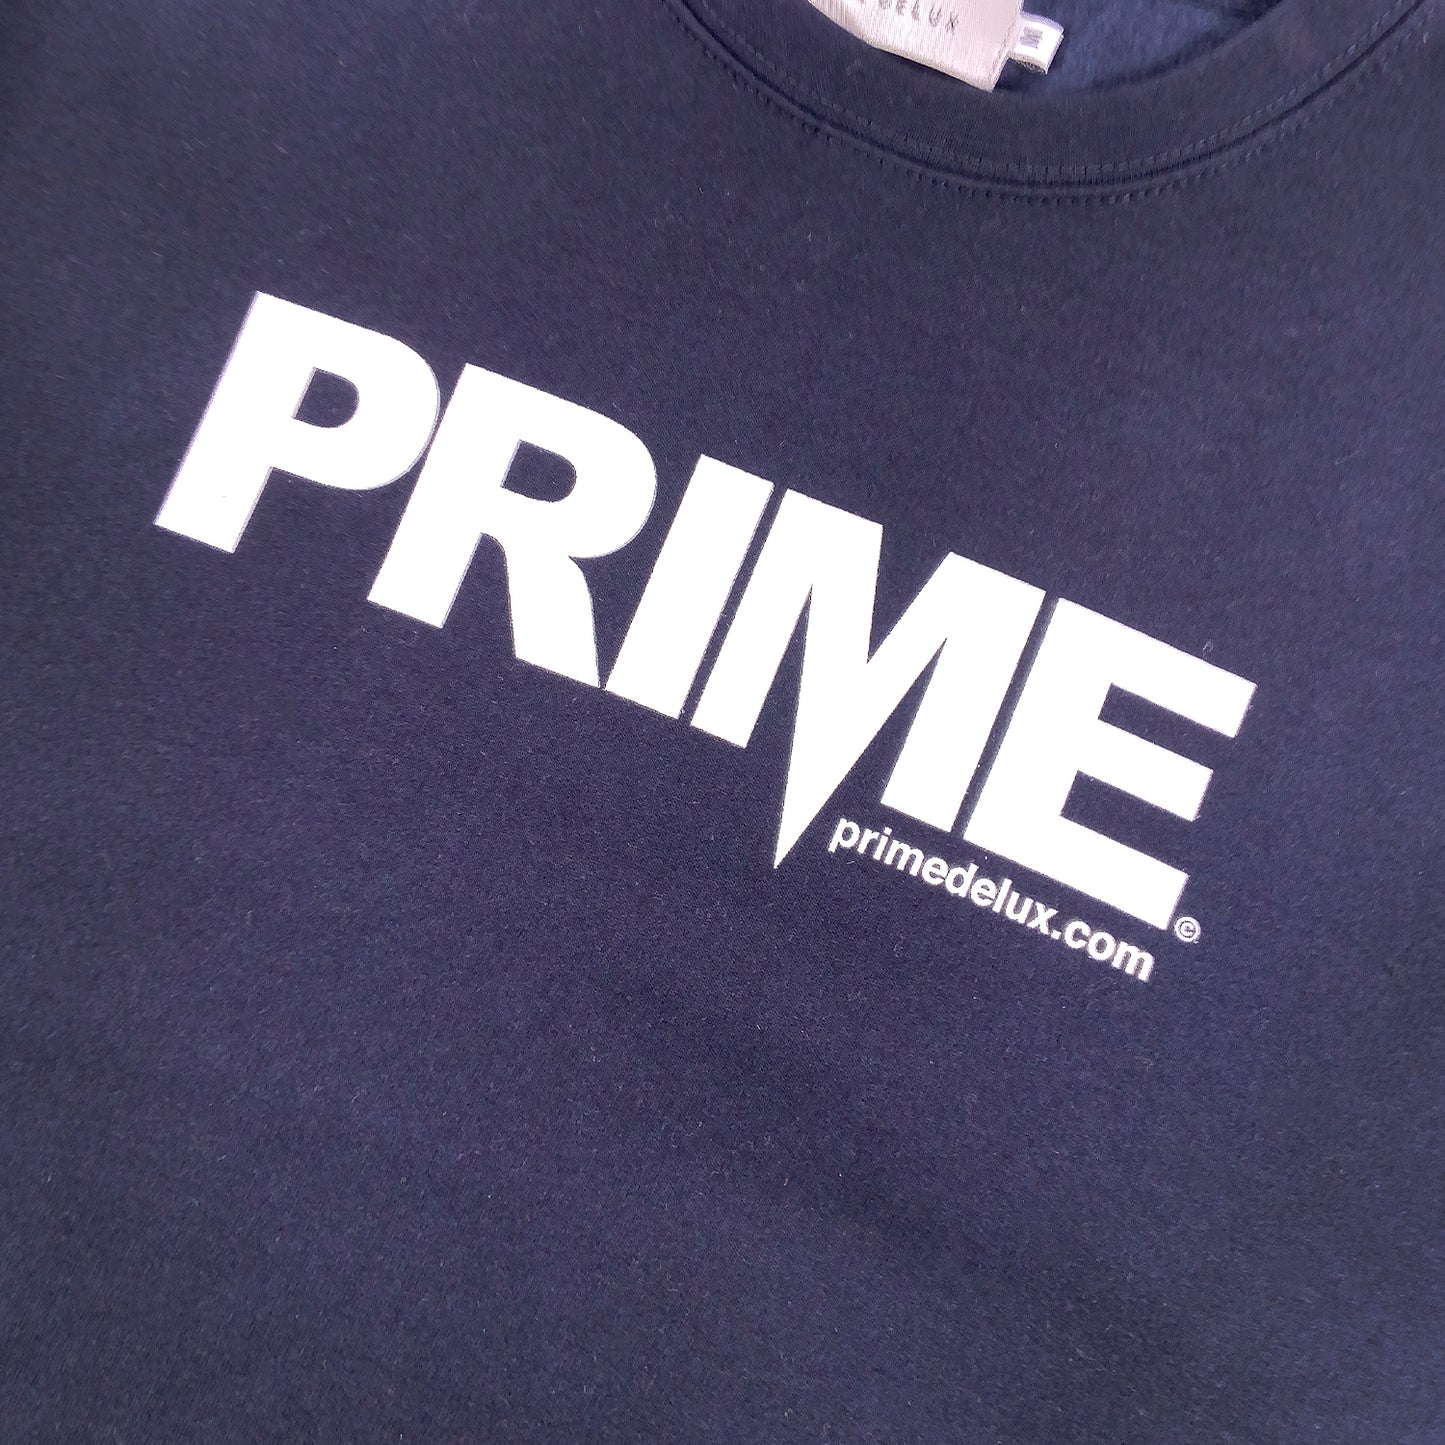 PRIME DELUX OG PREMIUM CREW SWEAT - NEW FRENCH NAVY / WHITE - Prime Delux Store